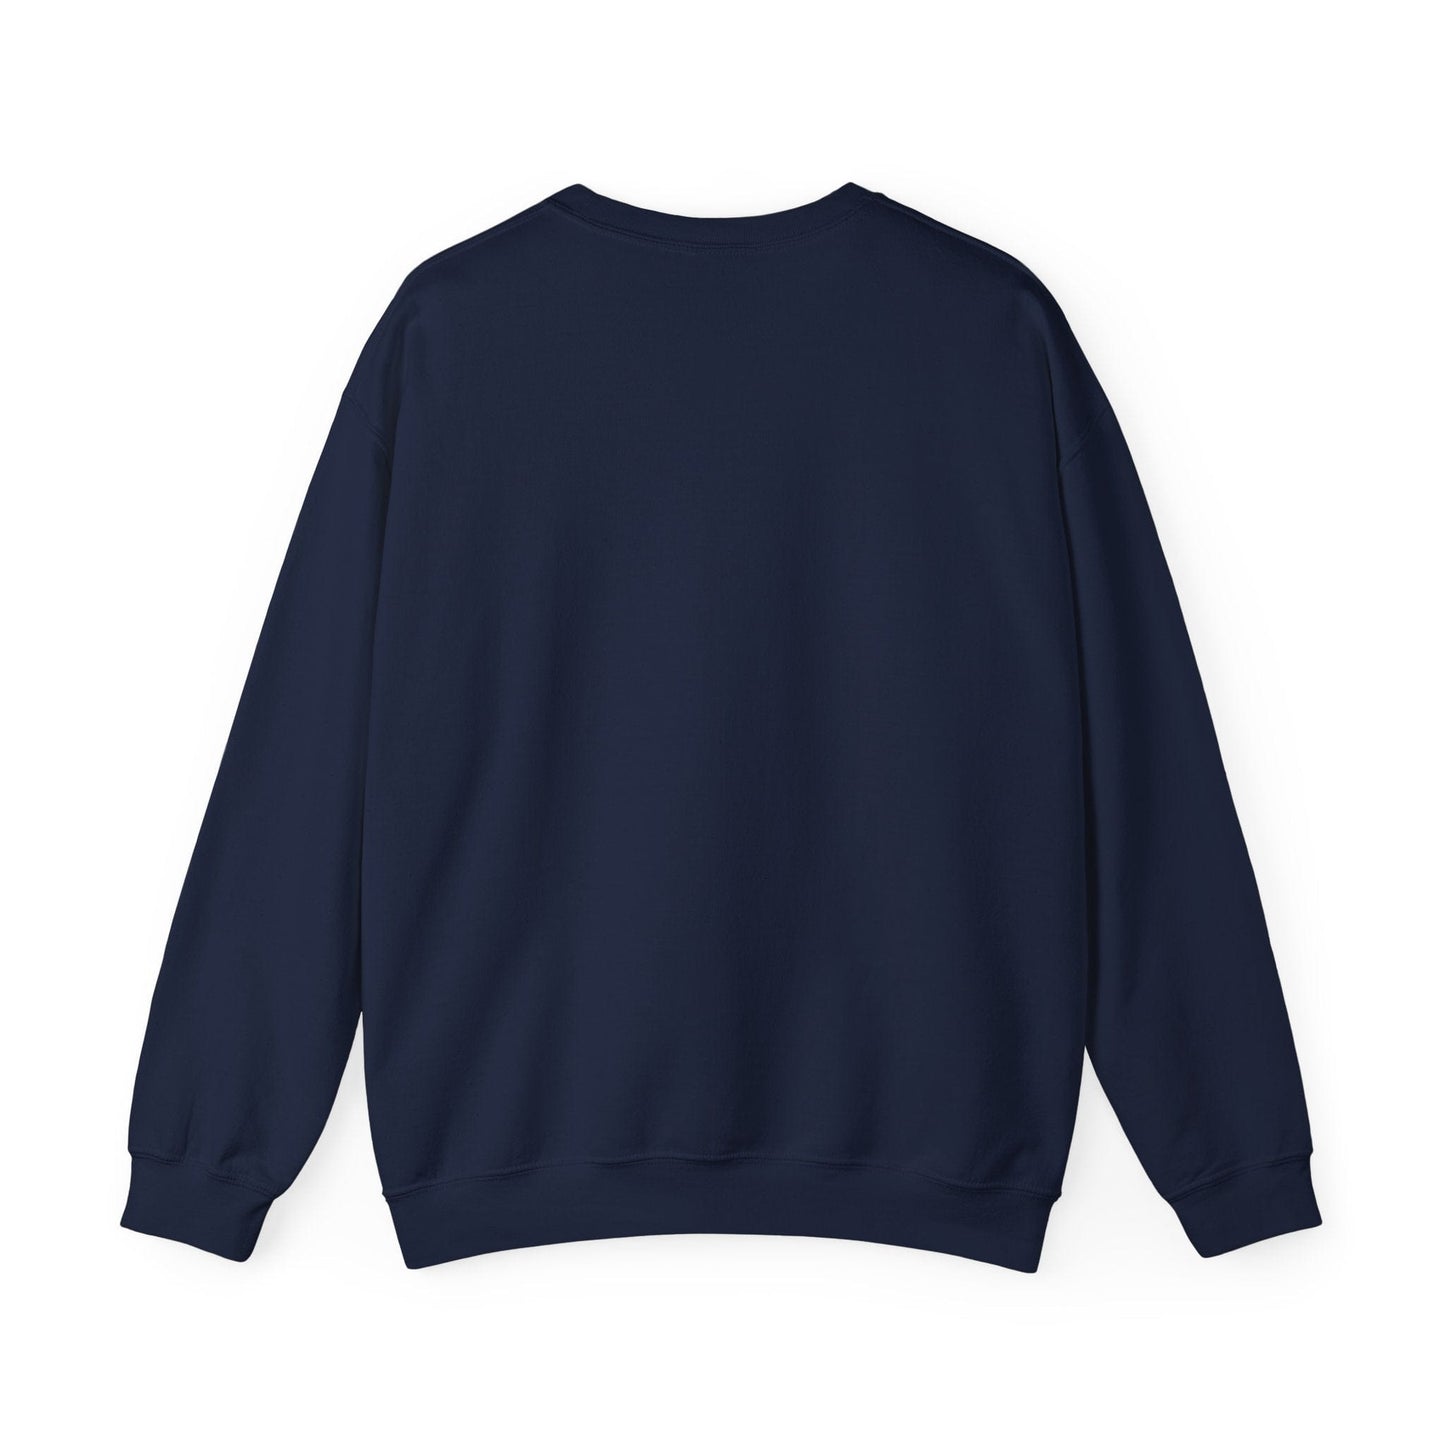 Sweatshirt Taurus Lunar Phase Sweater